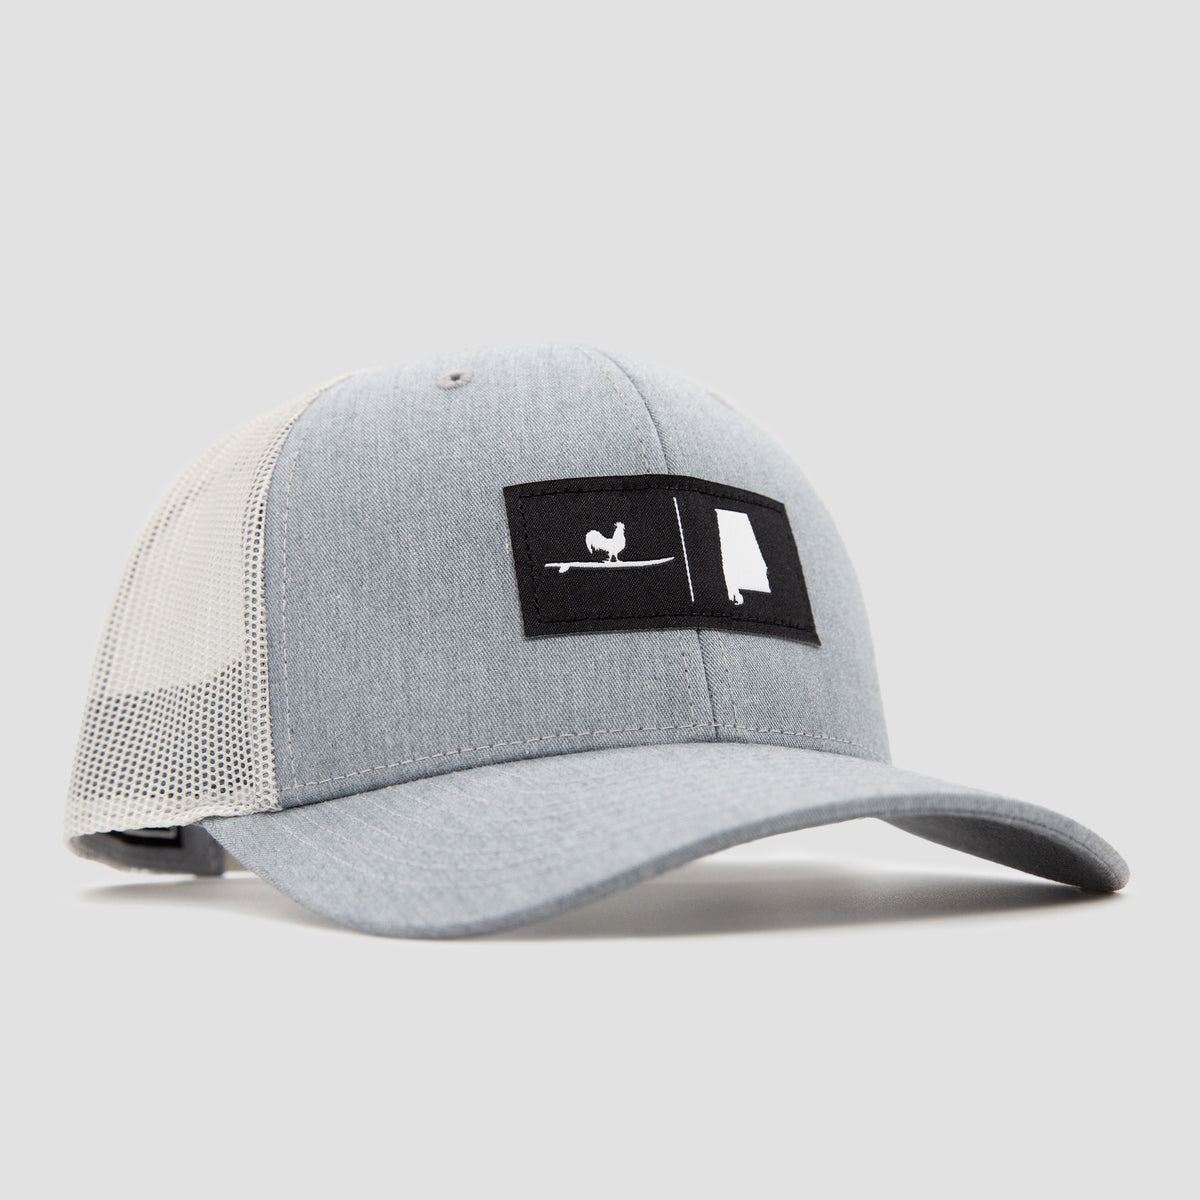 Alabama Woven Label Snapback Hat